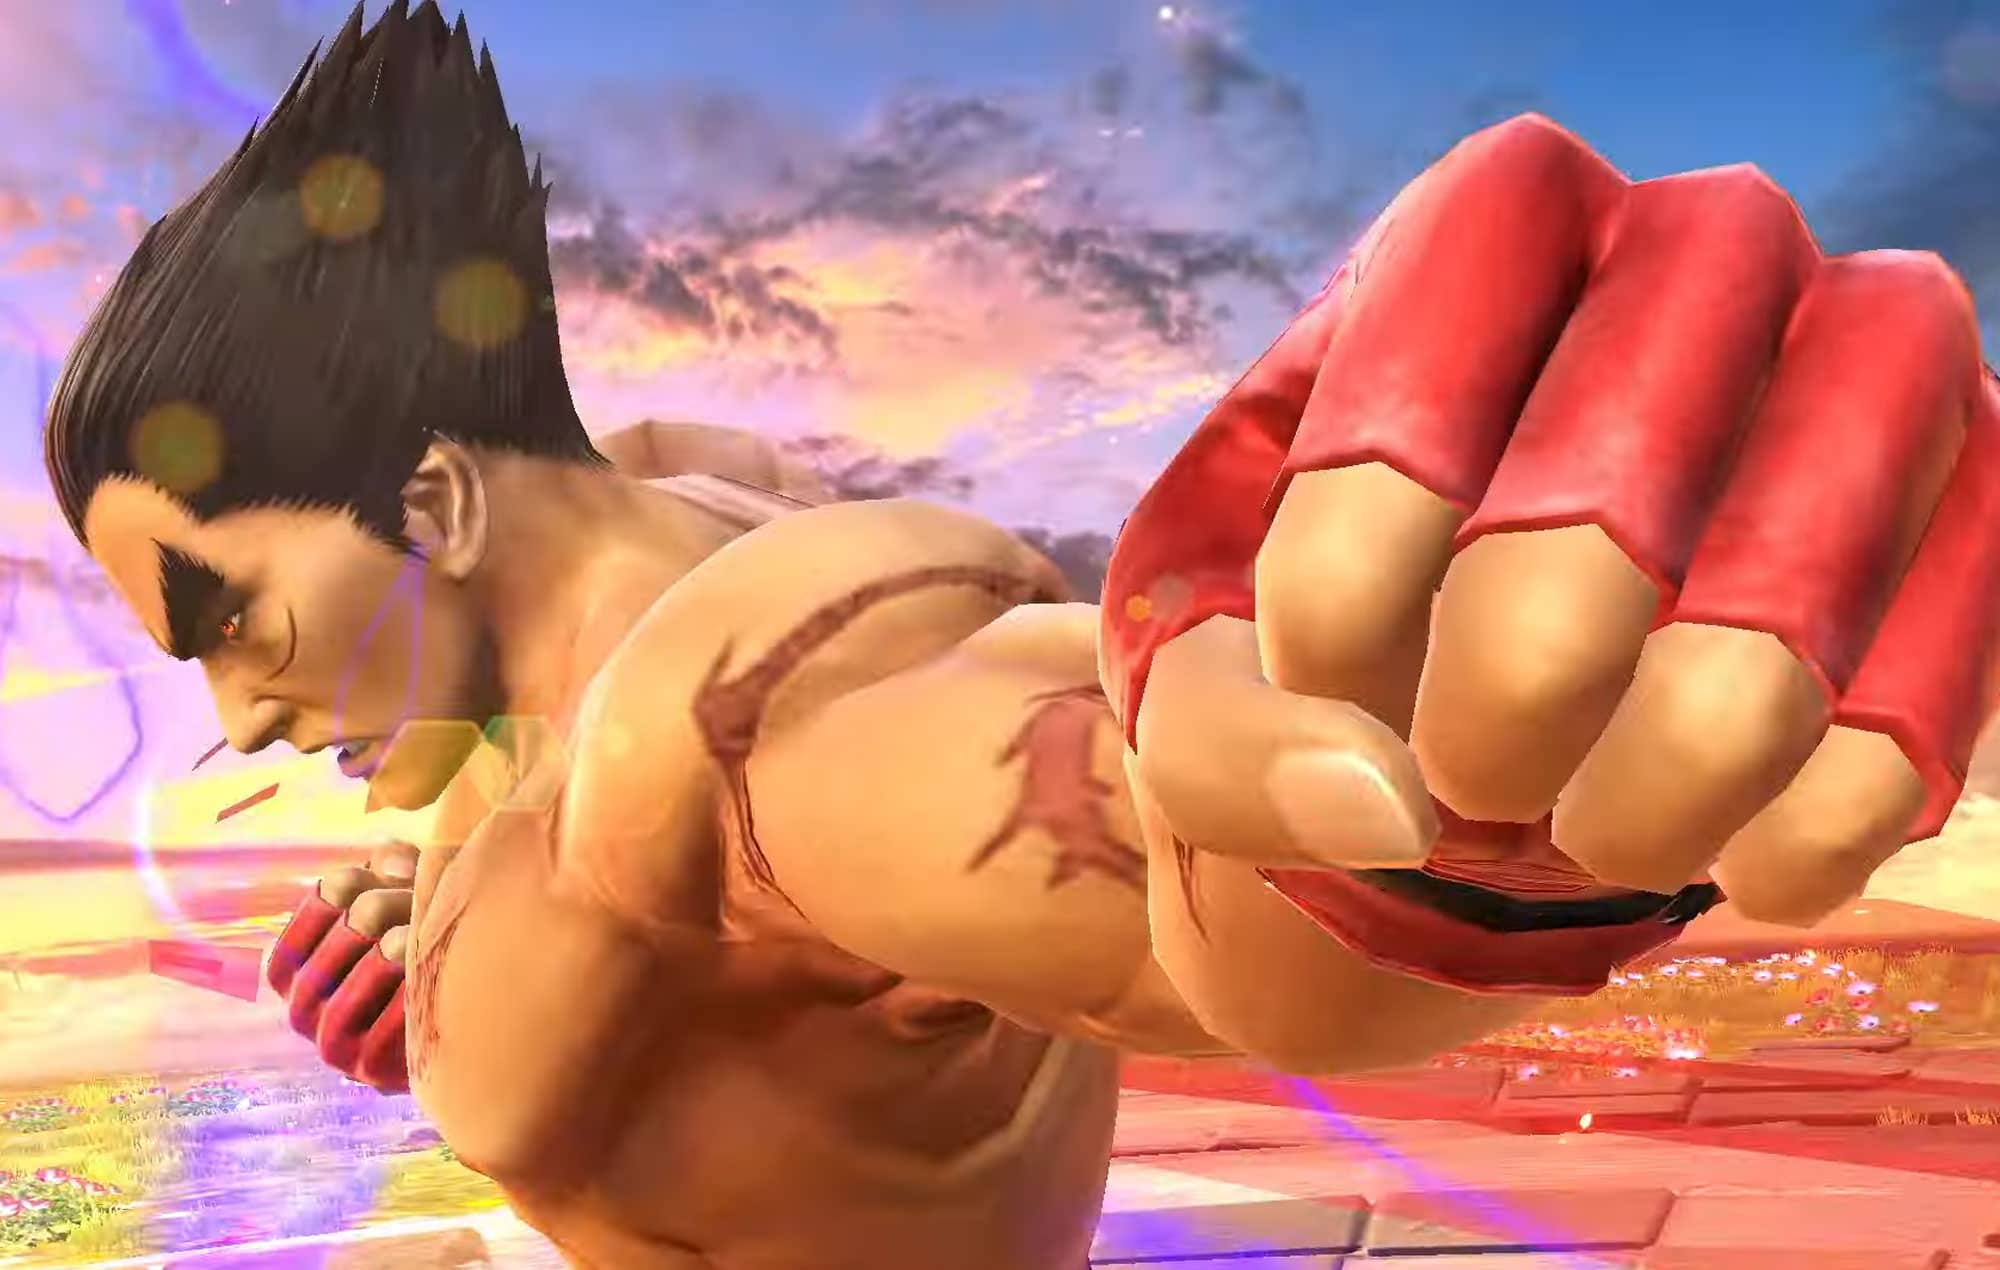 Tekken's Kazuya Mishima is coming to Smash Bros. Ultimate - CNET